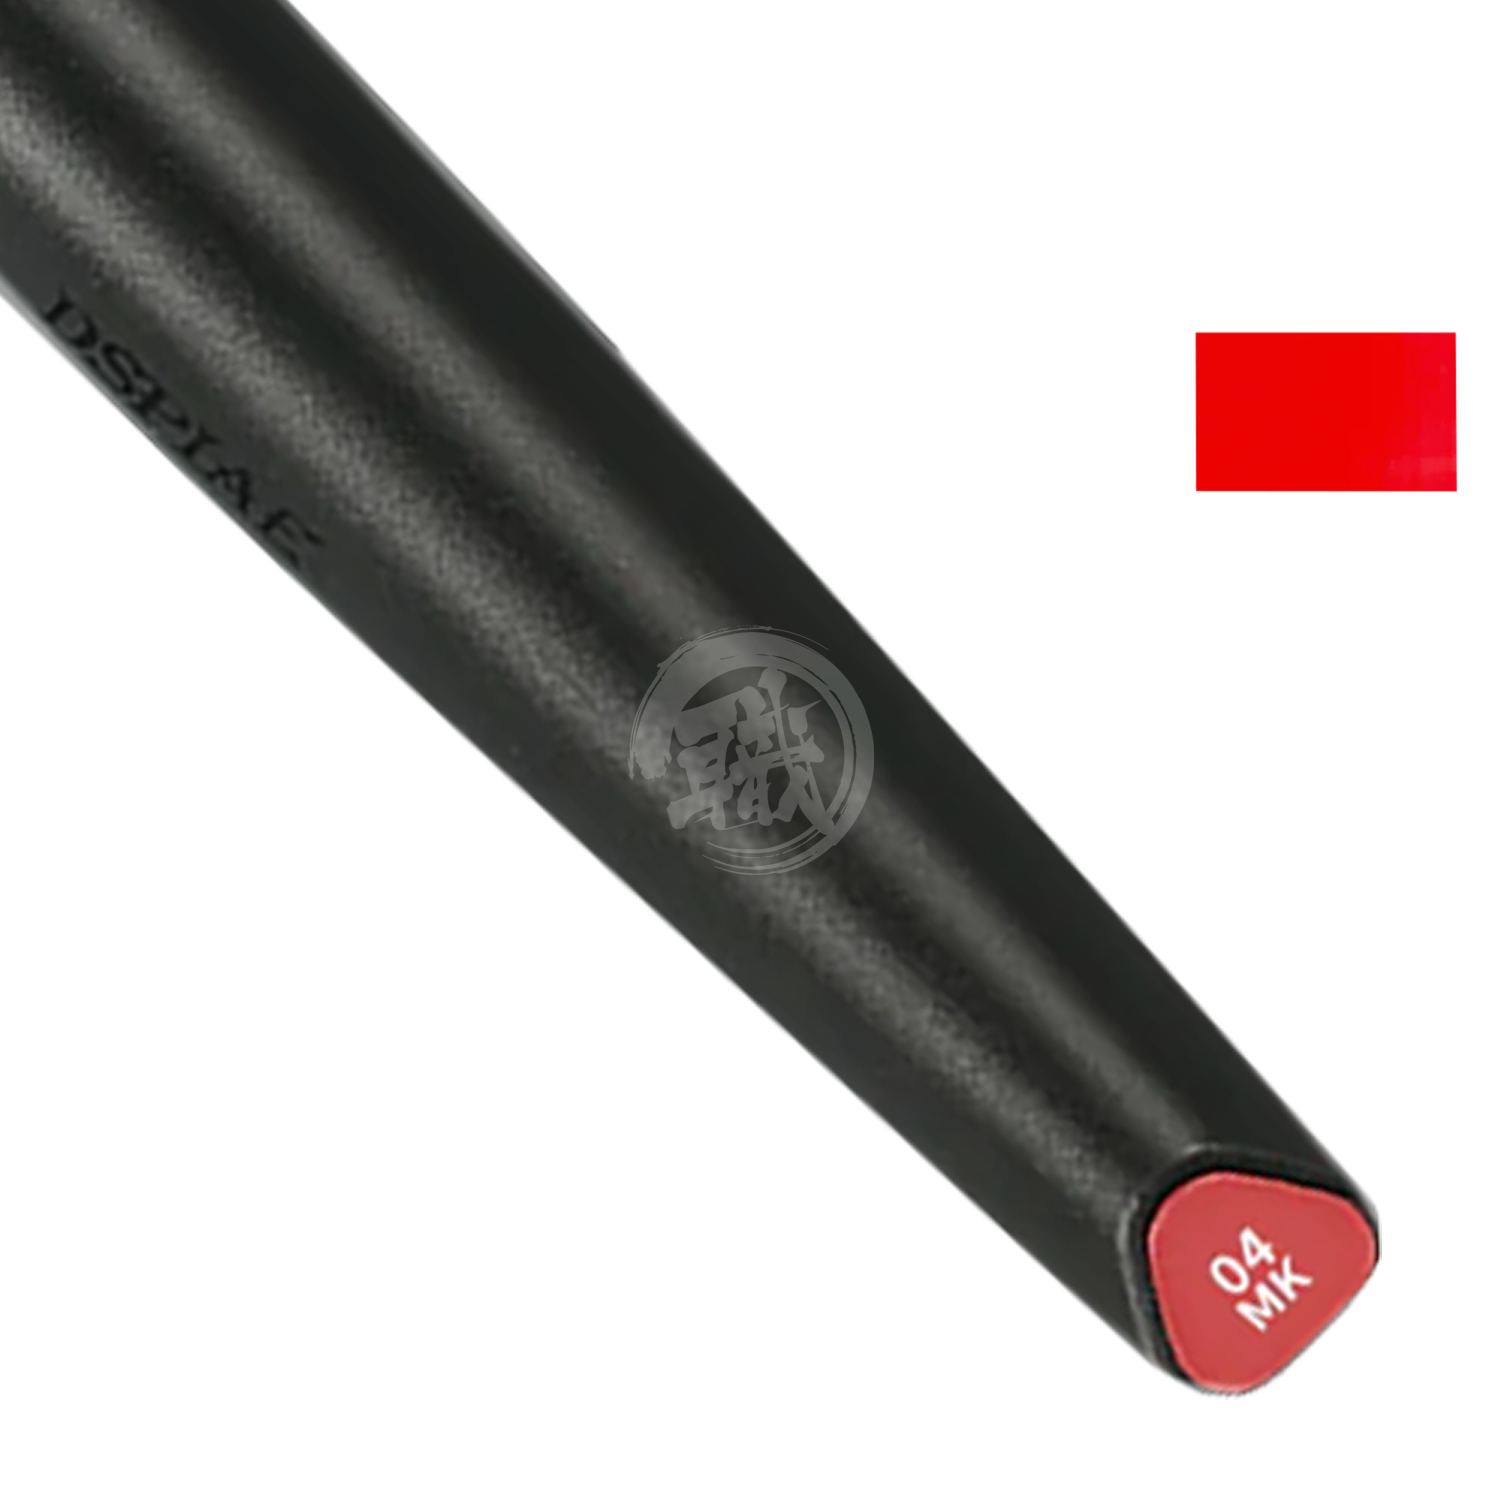 DSPIAE - MK-04 Mecha Red Soft Tip Acrylic Marker - ShokuninGunpla